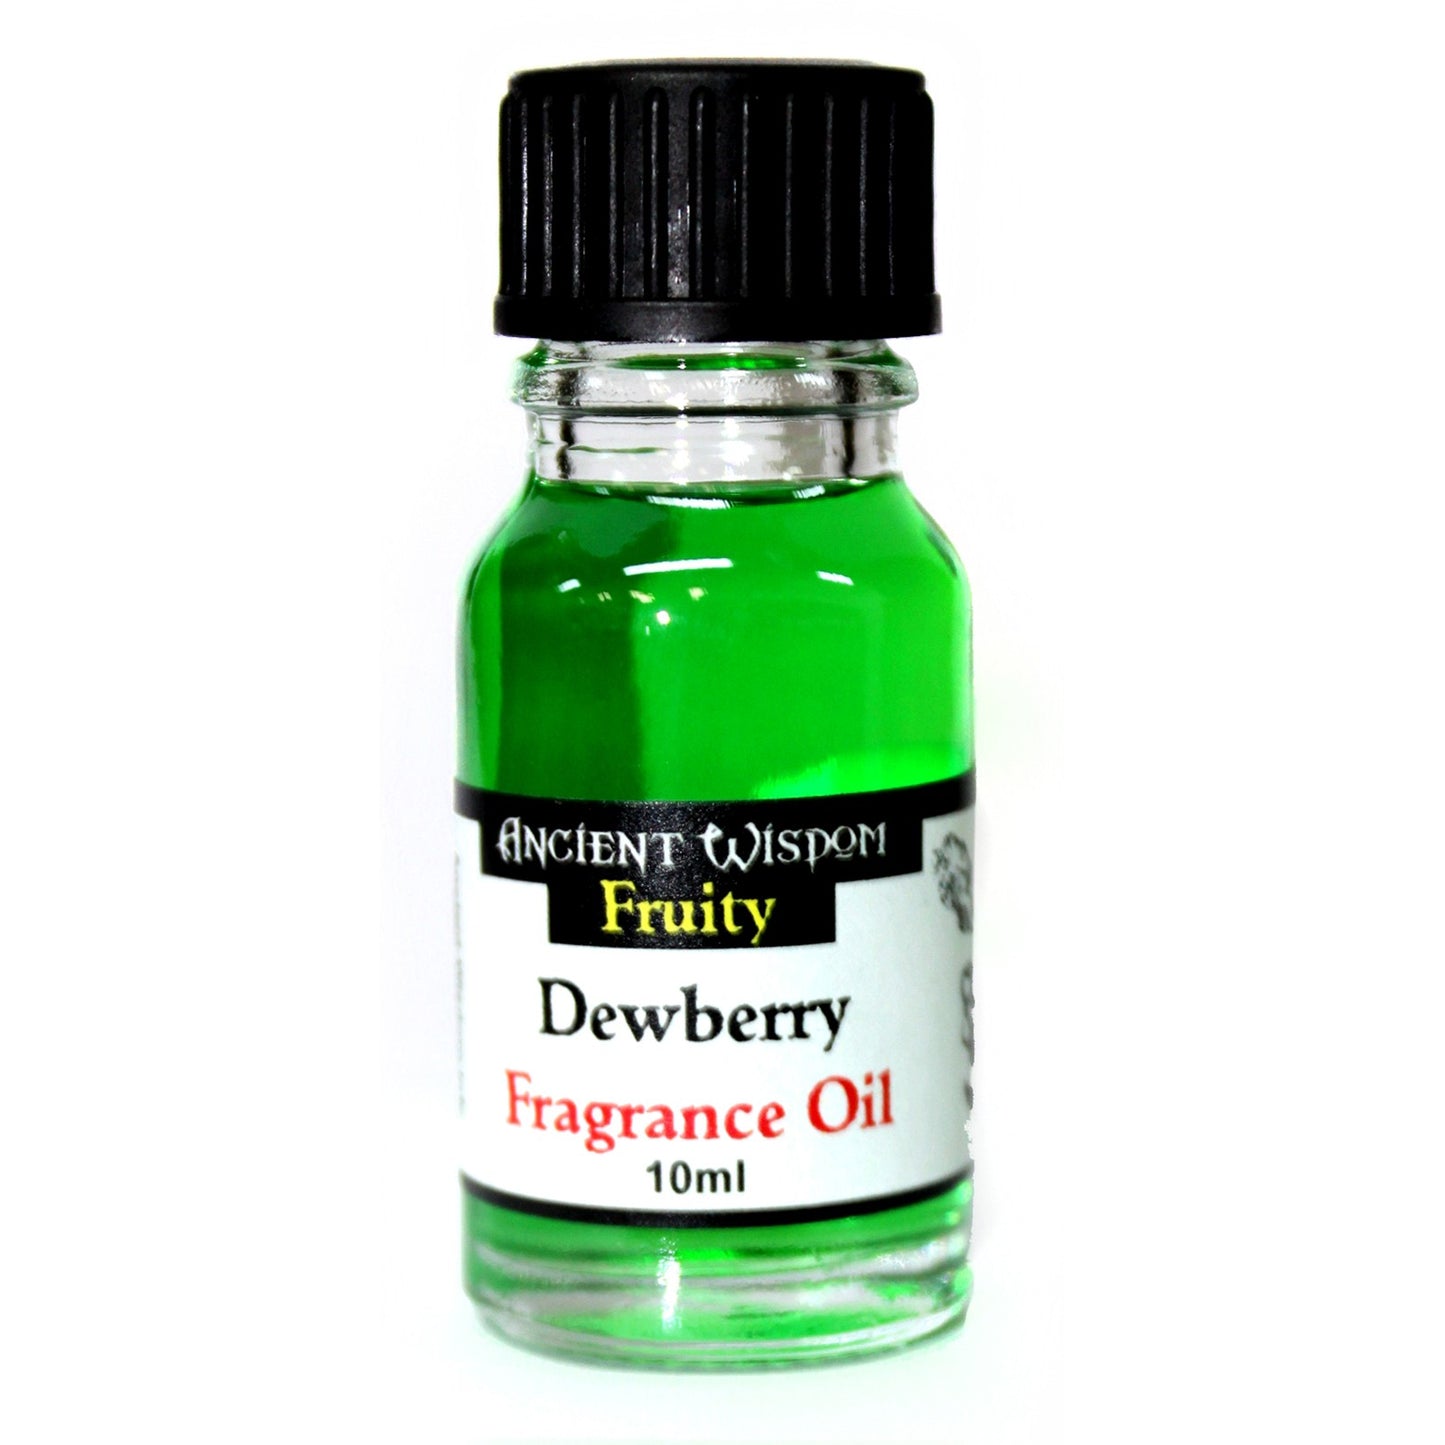 Dewberry Fragrance Oil - 10ml